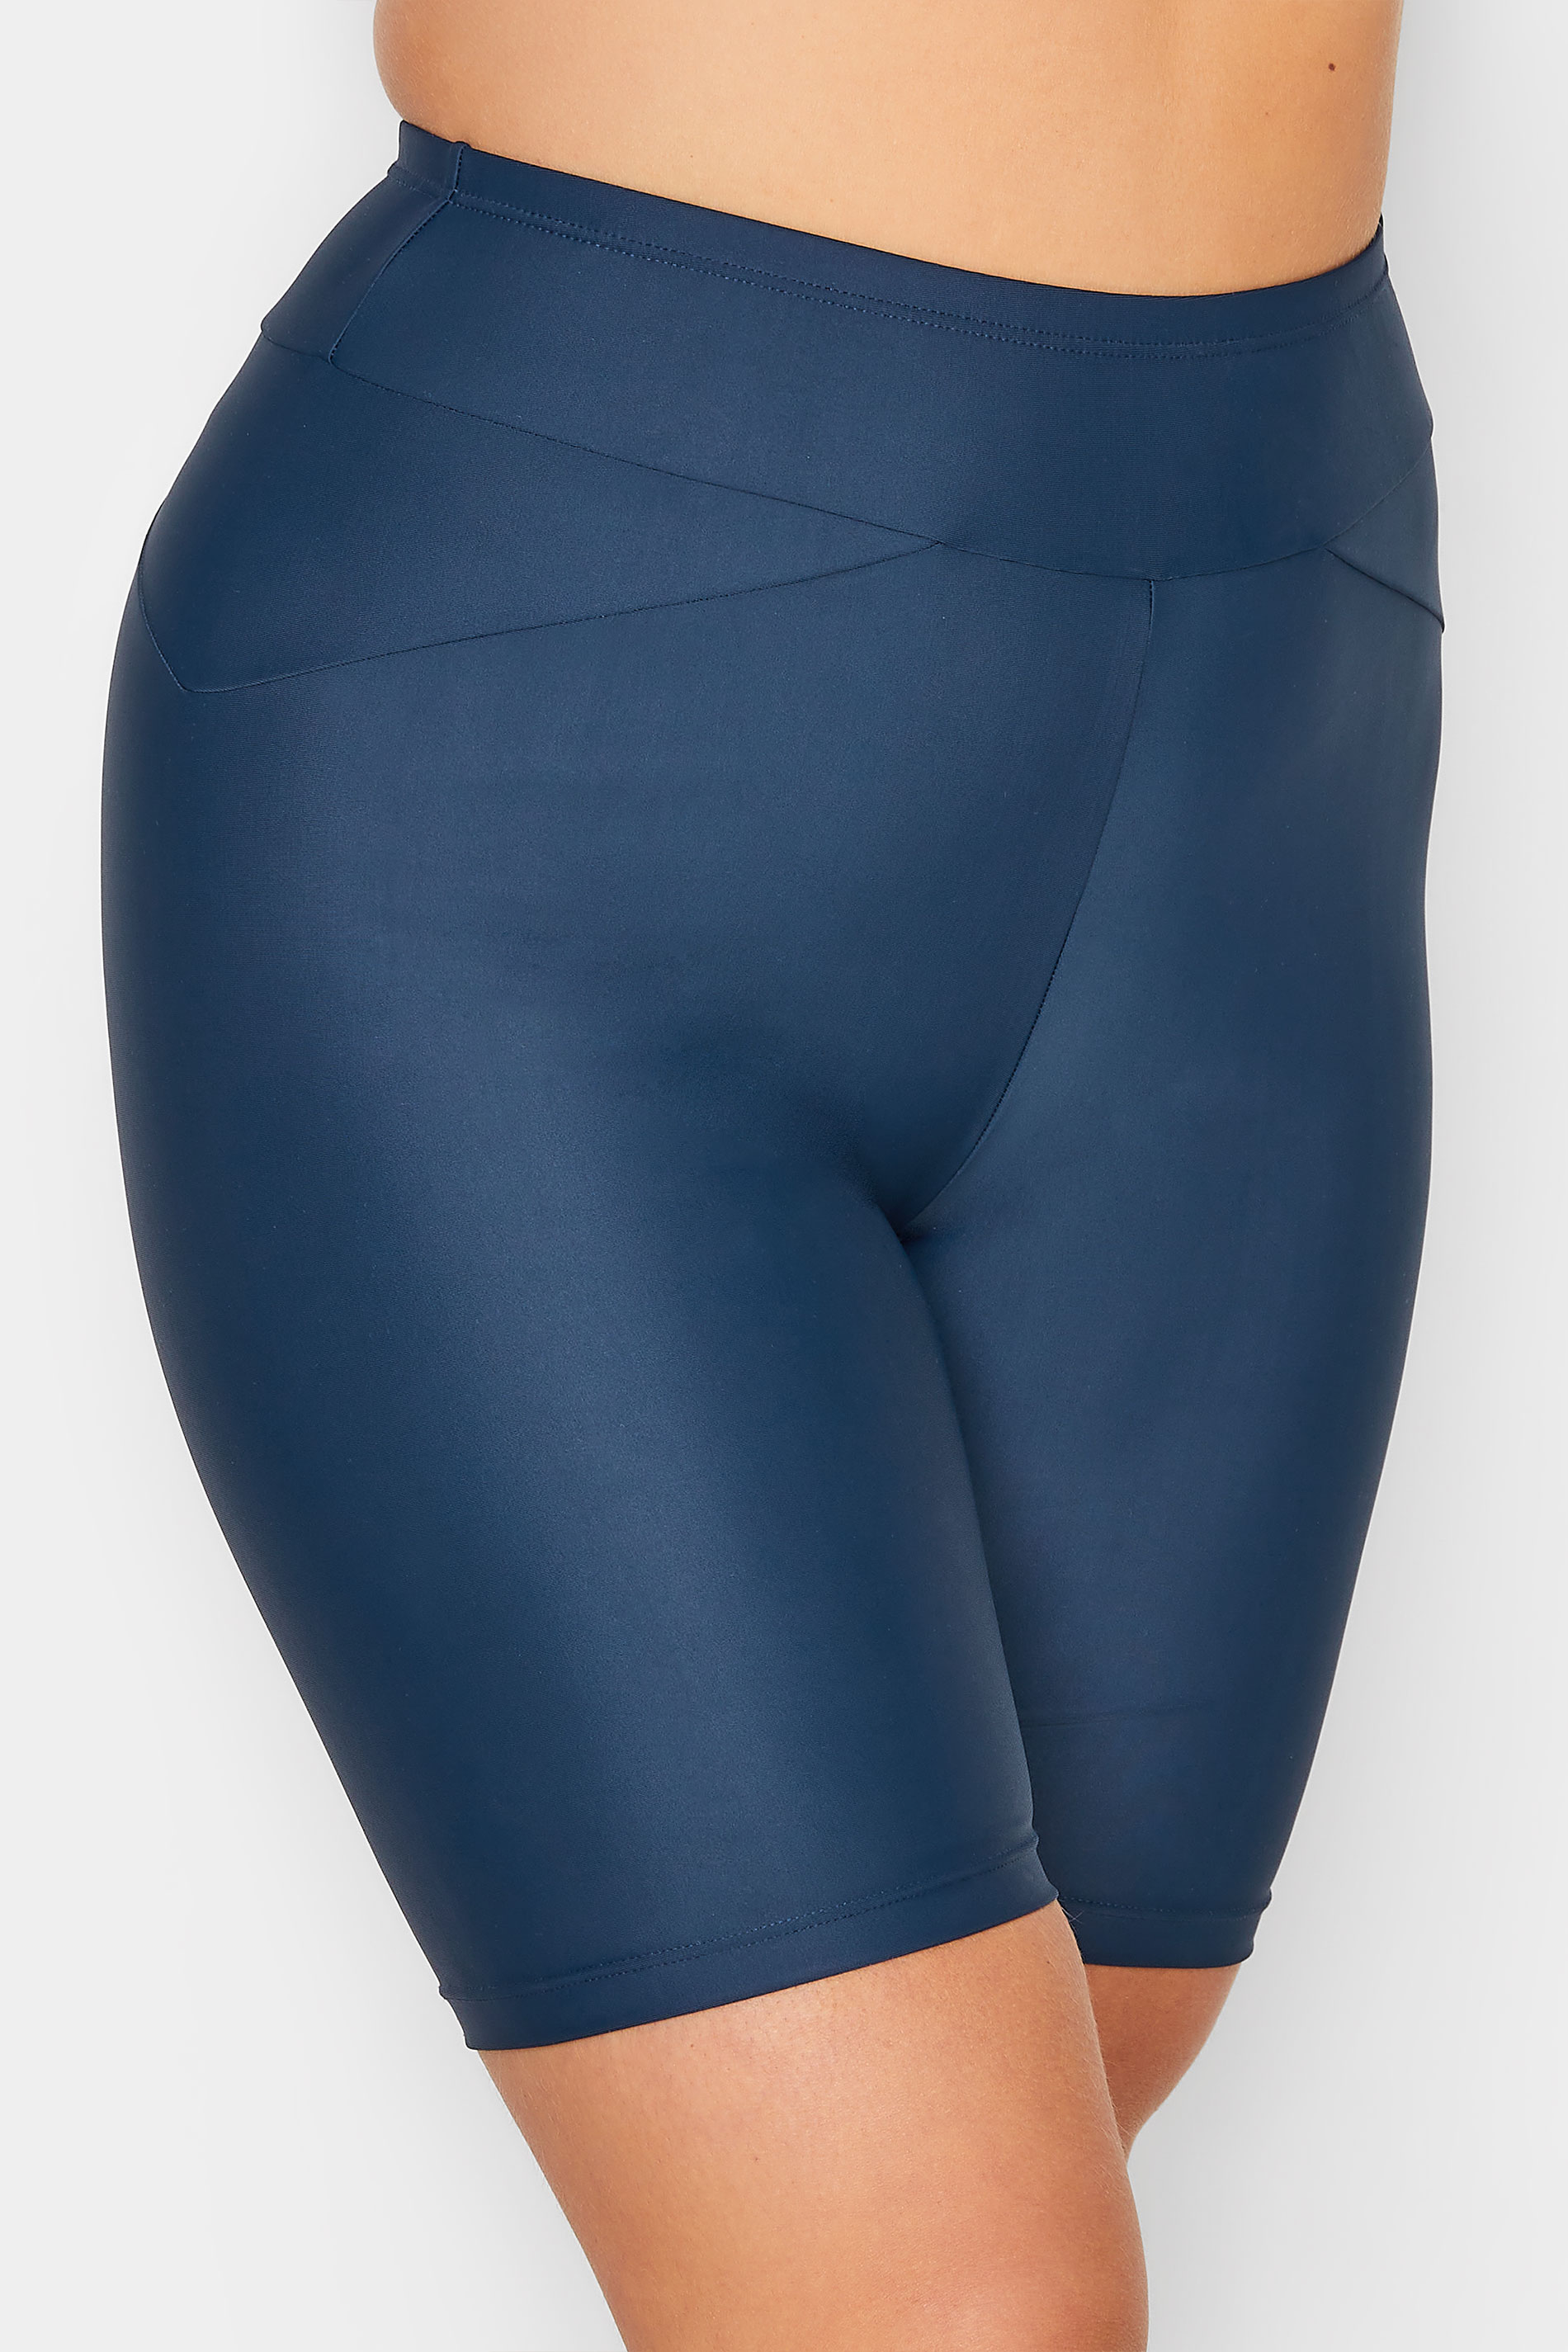 YOURS Plus Size Navy Blue Swim Shorts | Yours Clothing 1